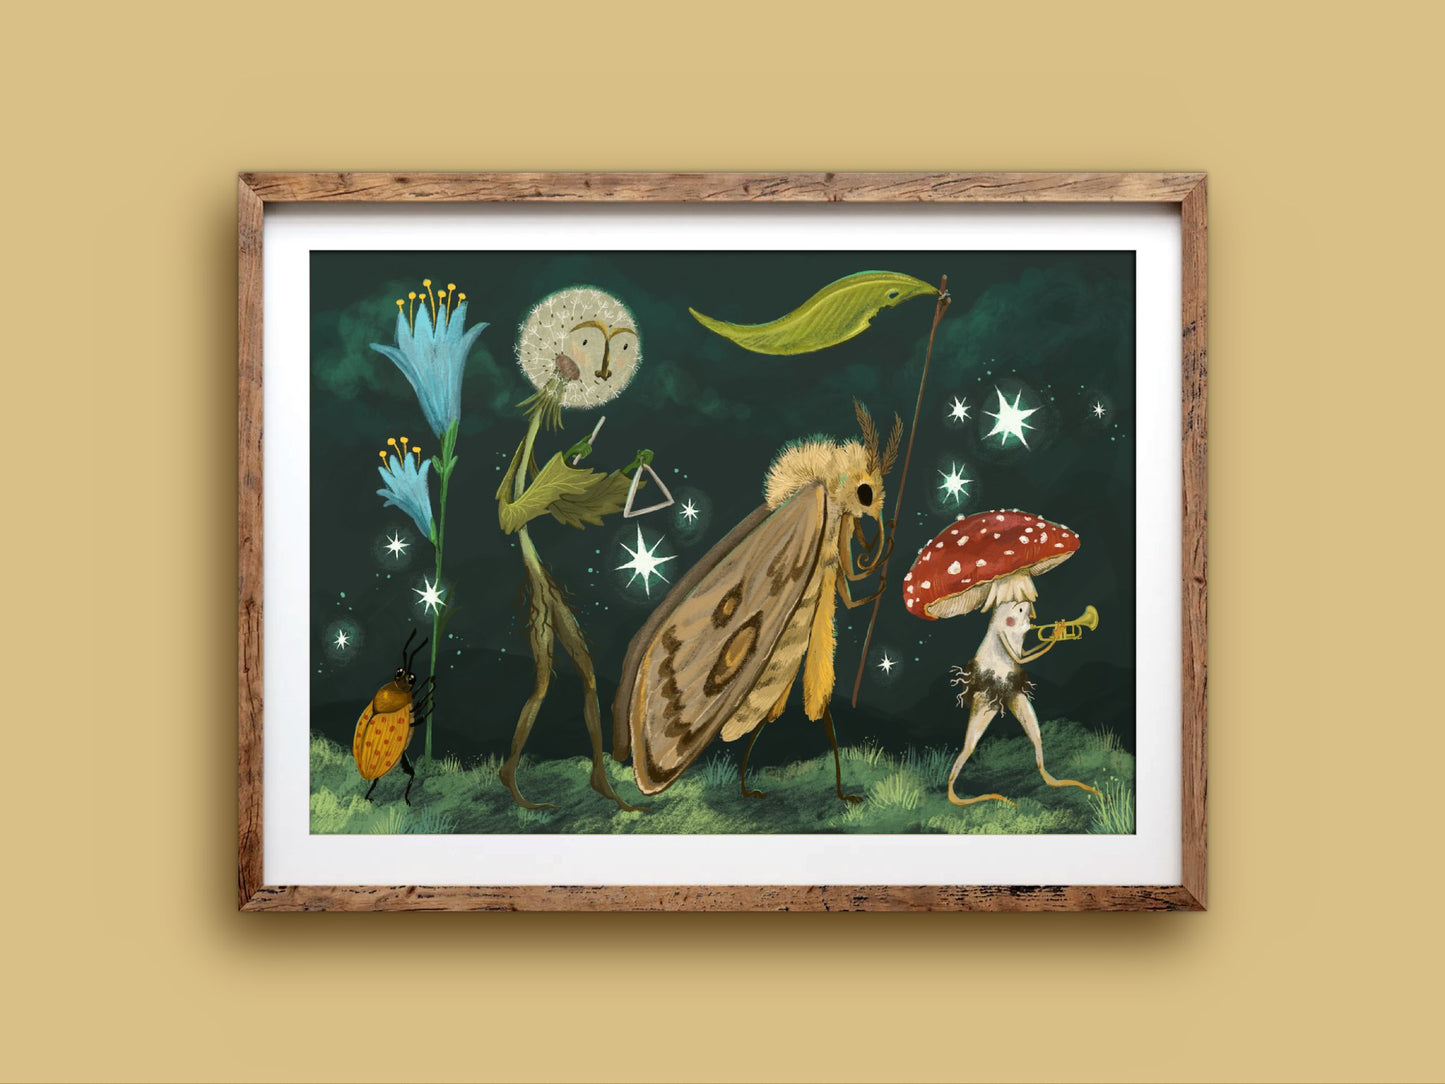 Anna Seed Art | Art Print - Starlight Parade - Whimsical illustration, wall art